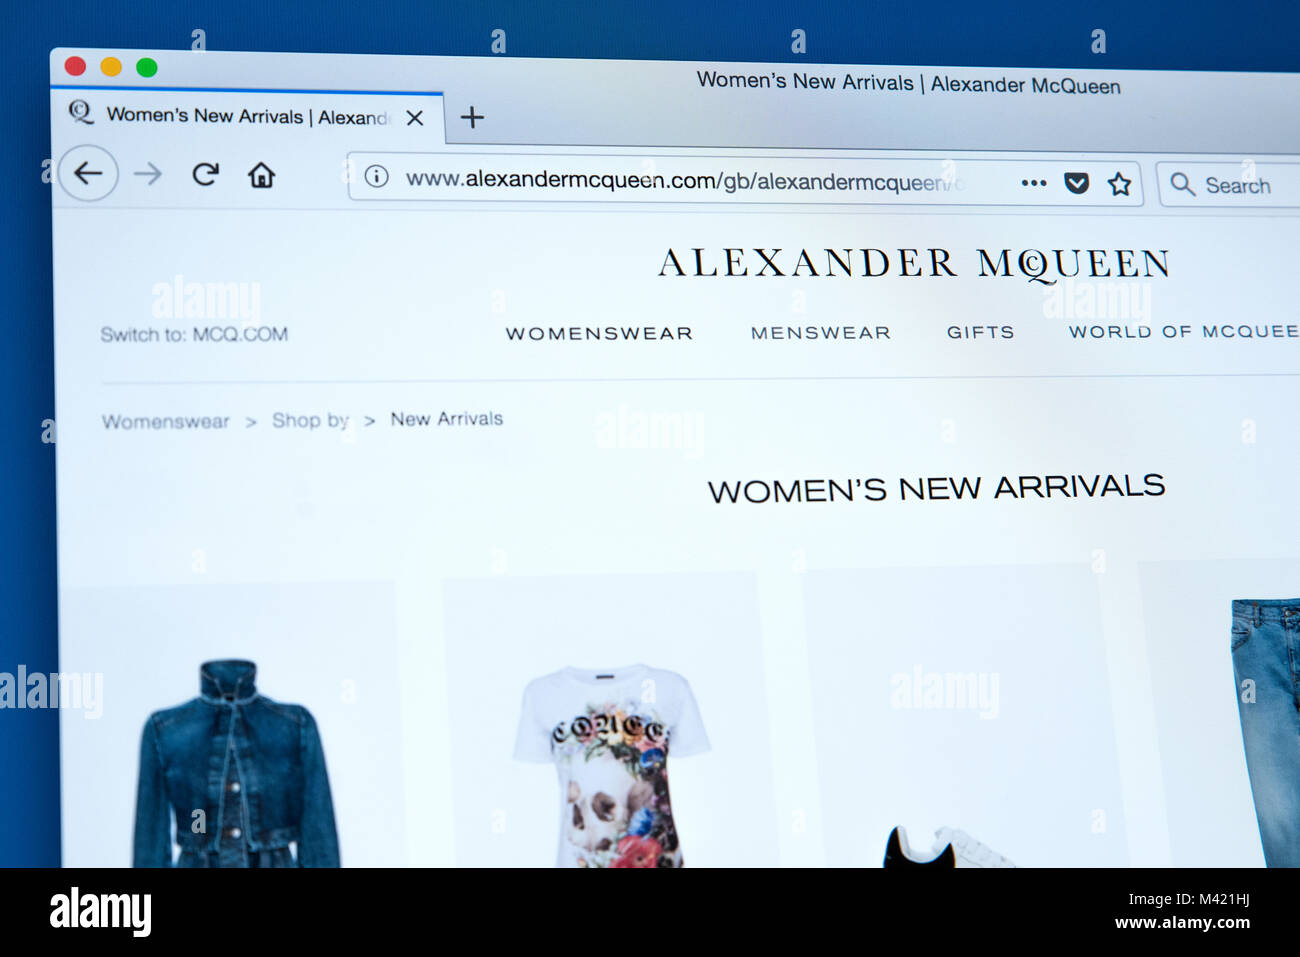 alexander mcqueen official website